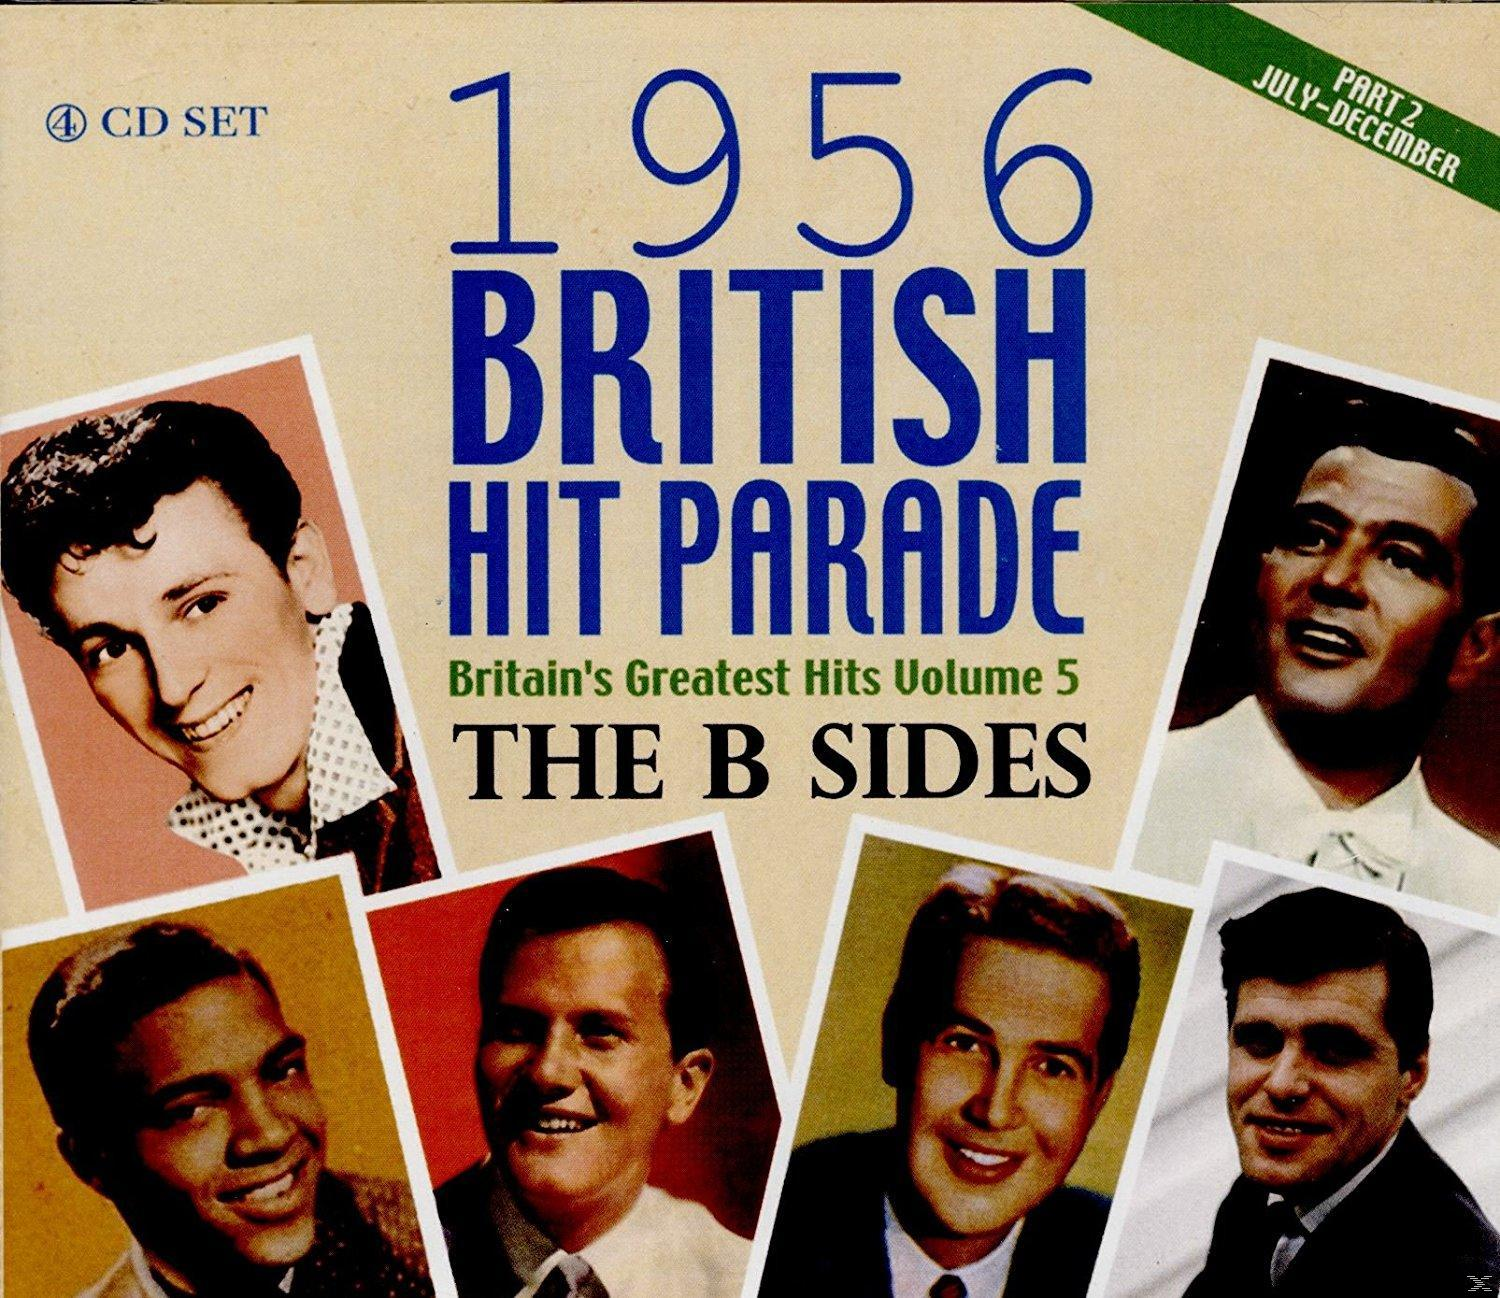 VARIOUS - The 1956 The Hit British - B Parade 2 Sides Part (CD)